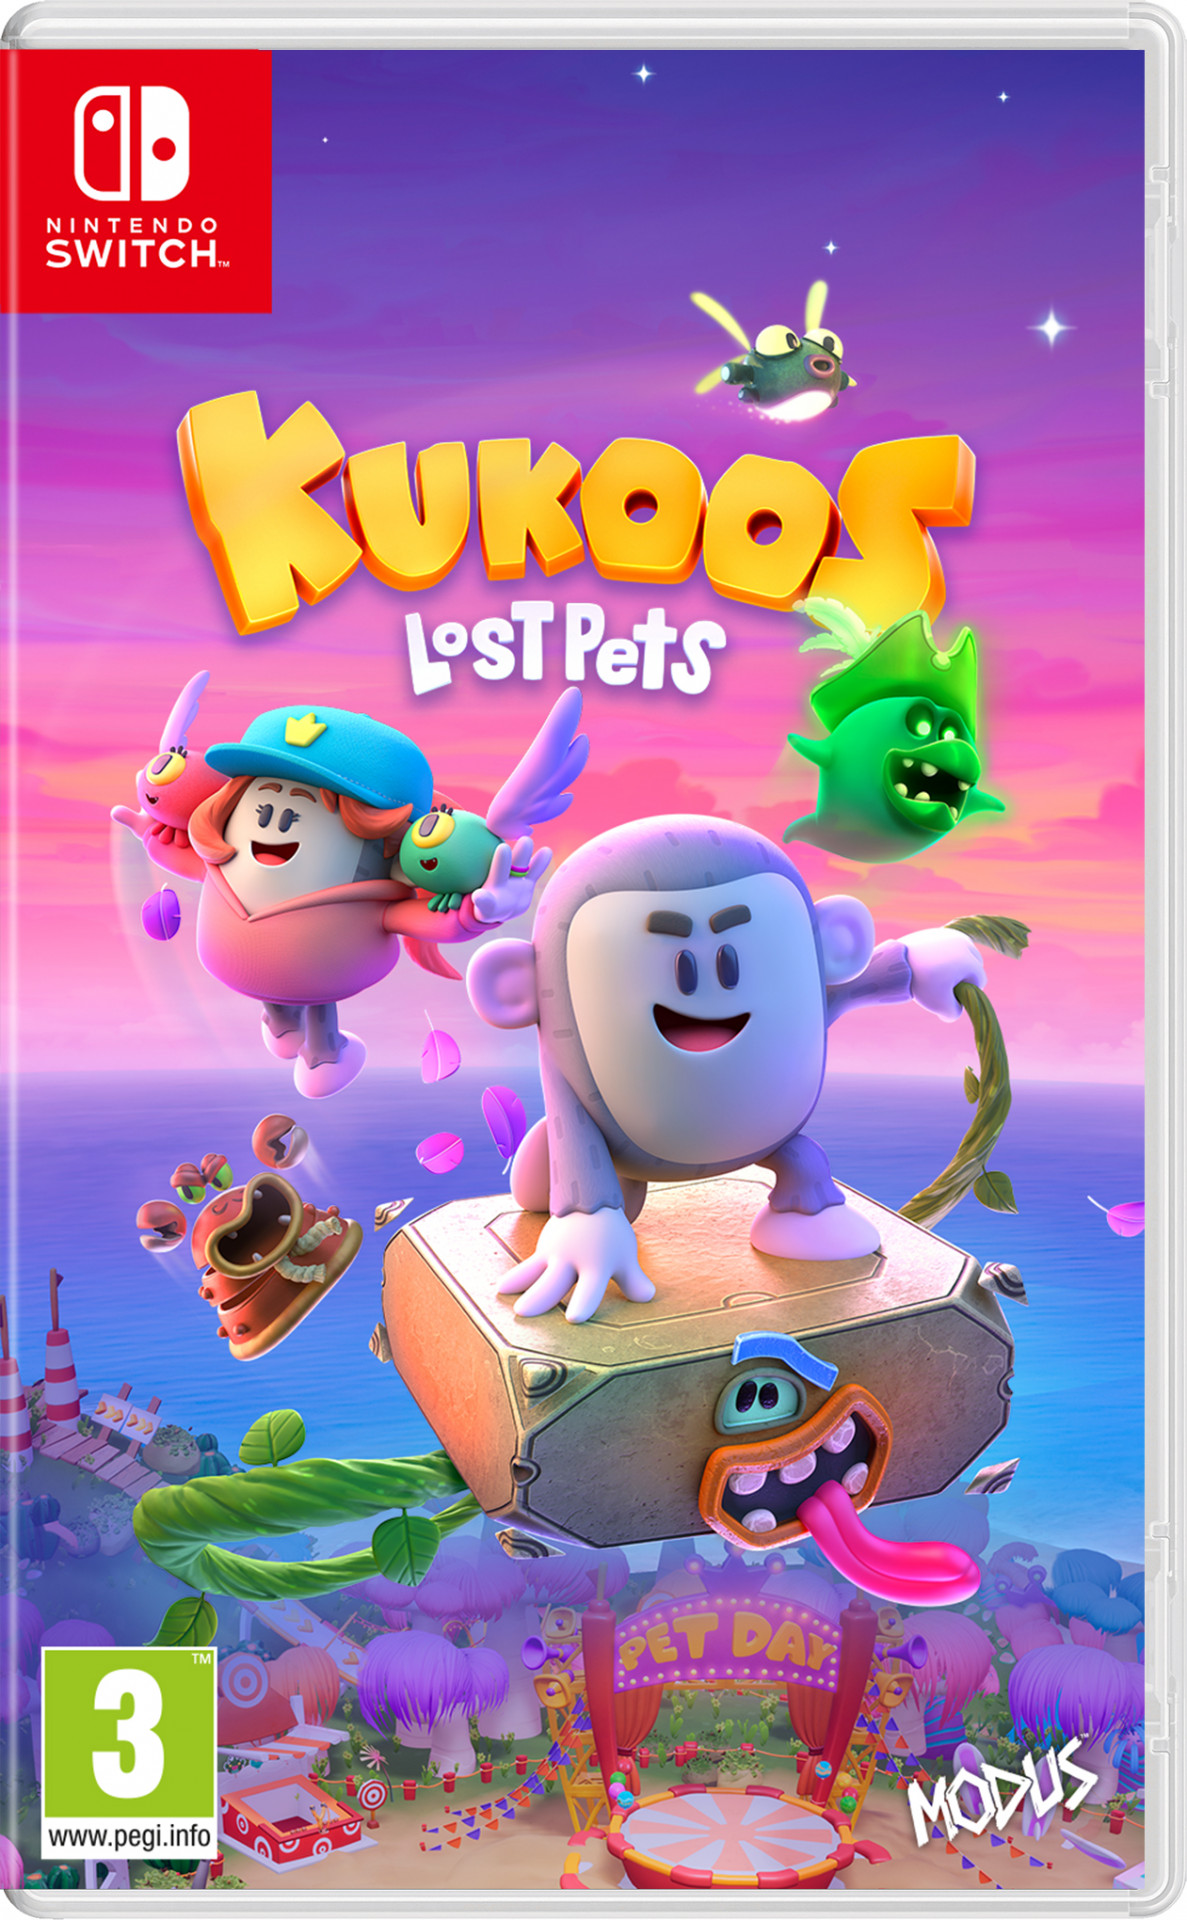 Kukoos Lost Pets - Nintendo Switch